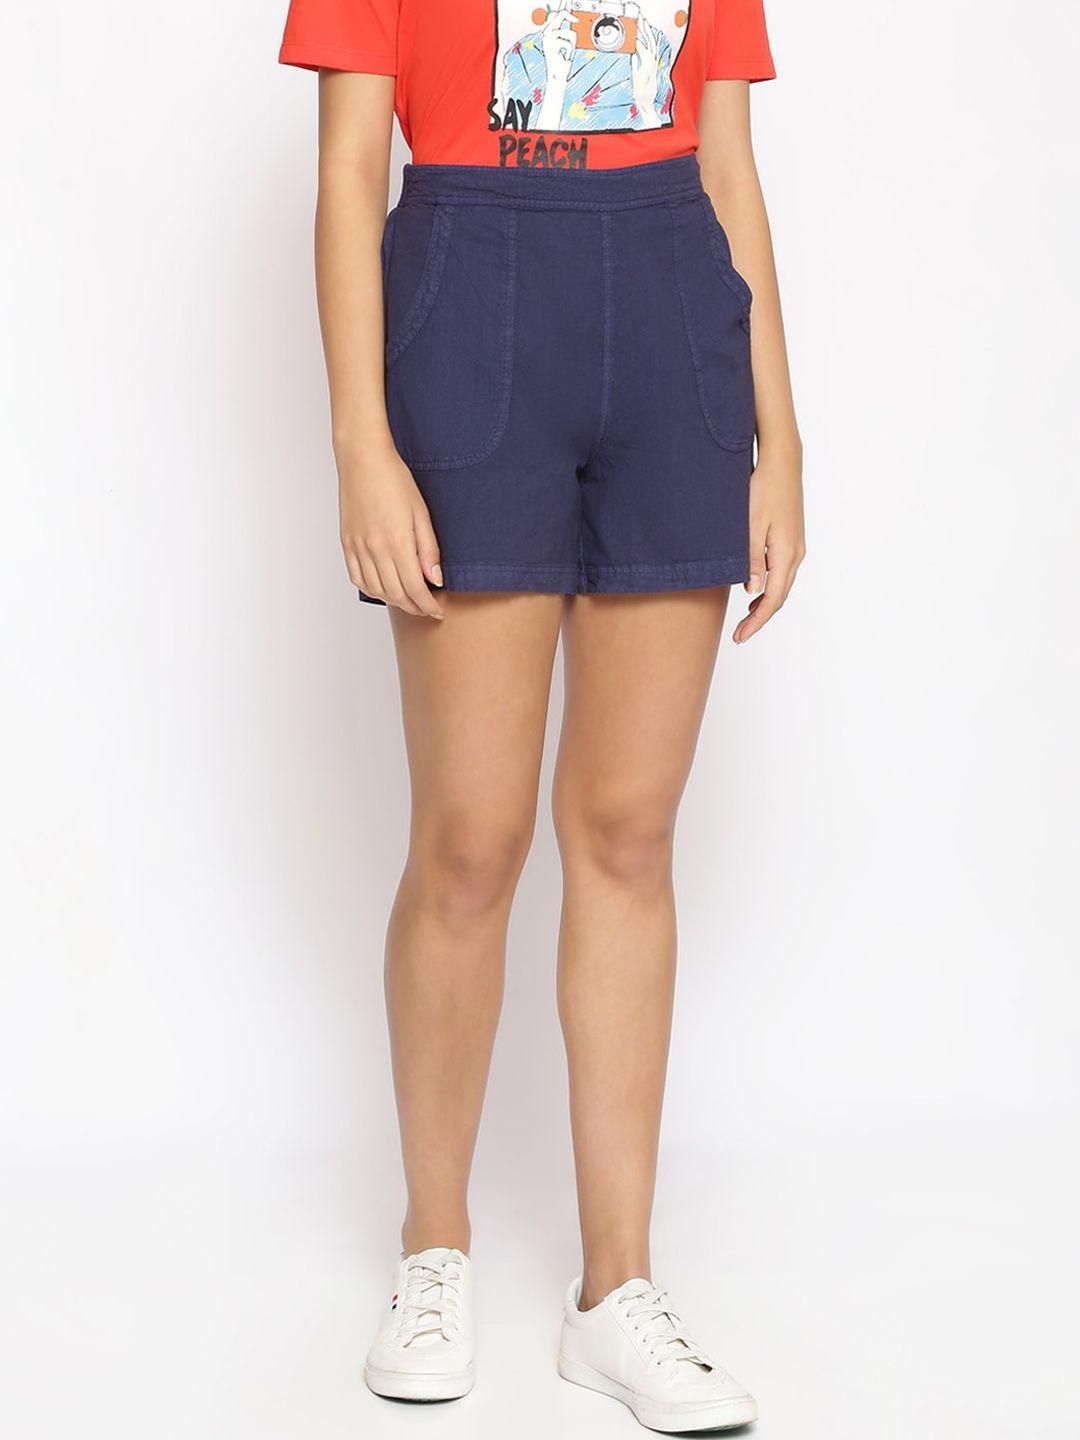 oxolloxo-women-navy-blue-solid-regular-fit-regular-shorts